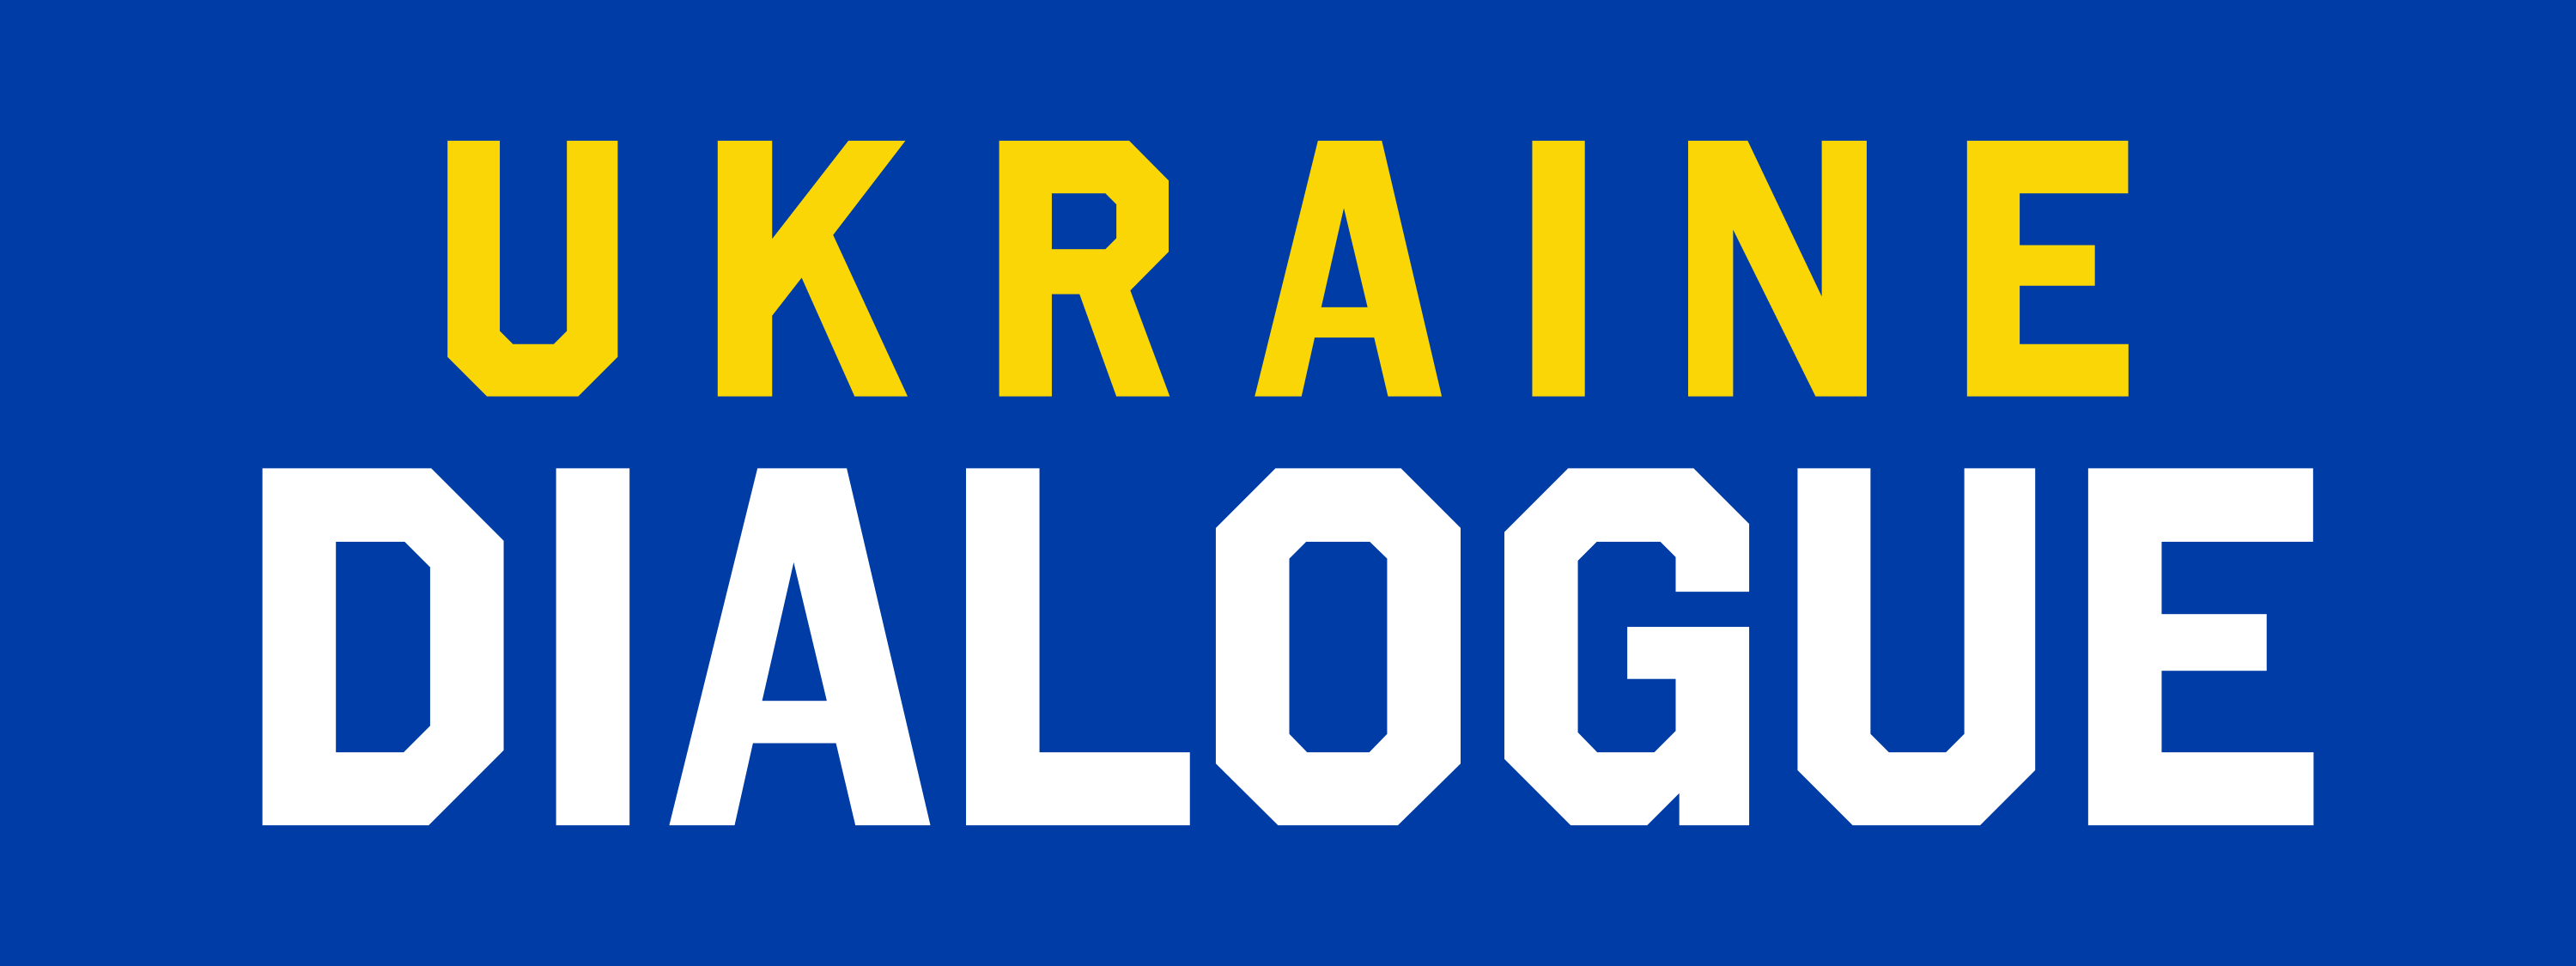 Ukrainian Dialogue 2022 web banner 